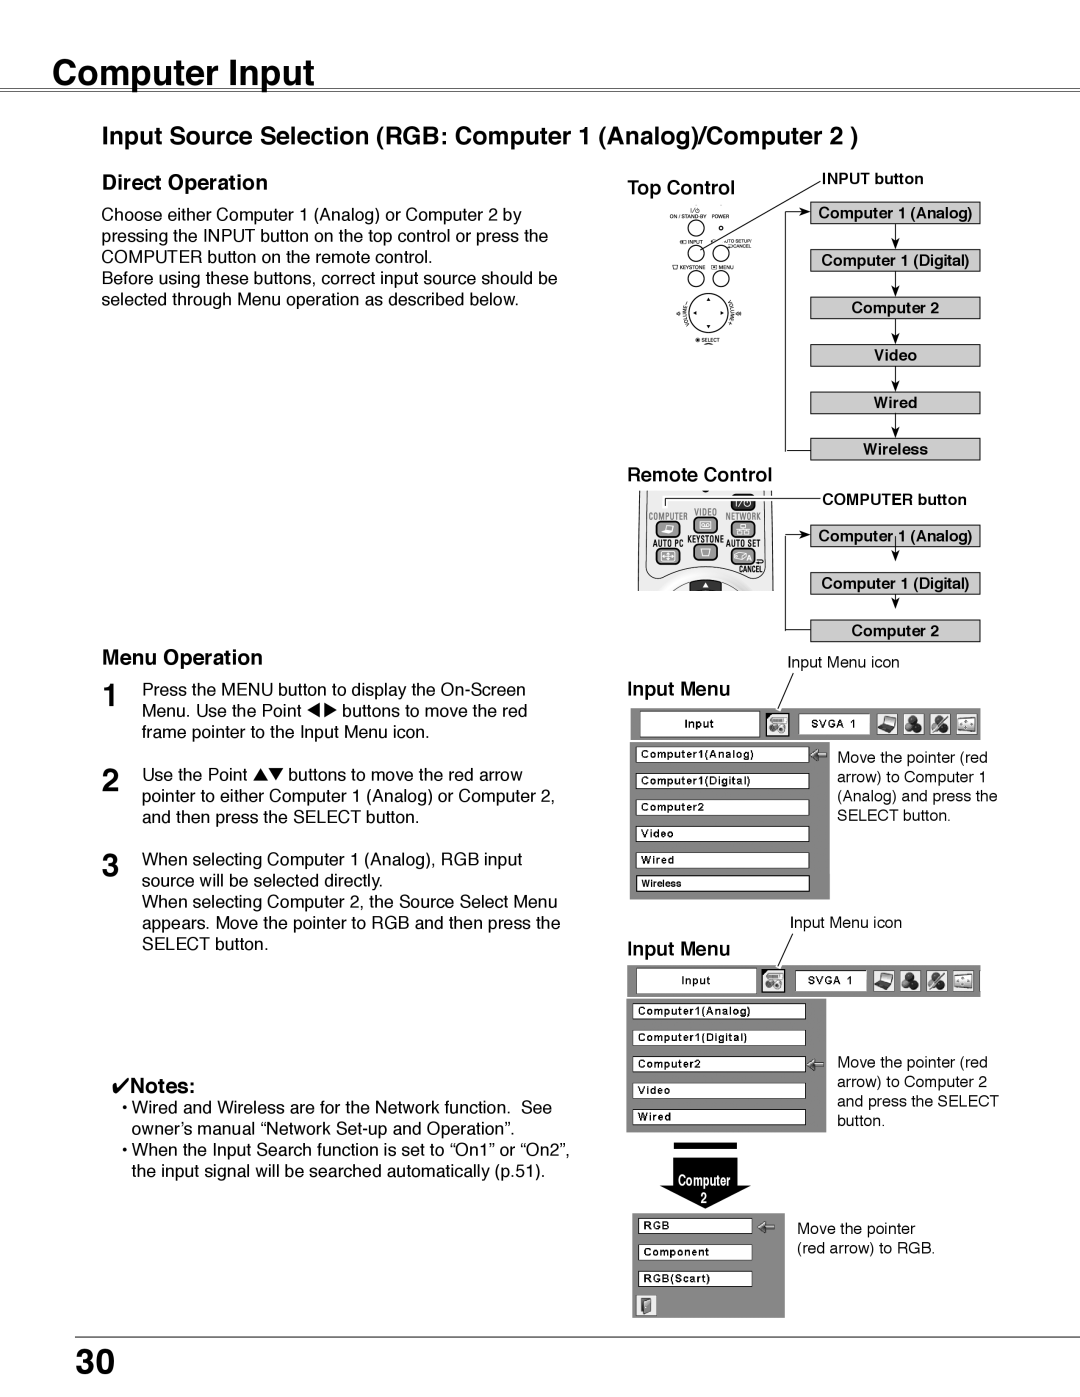 Eiki LC-WB40N owner manual Computer Input, Notes, Input Menu, Direct Operation, Menu Operation, Top Control, Remote Control 